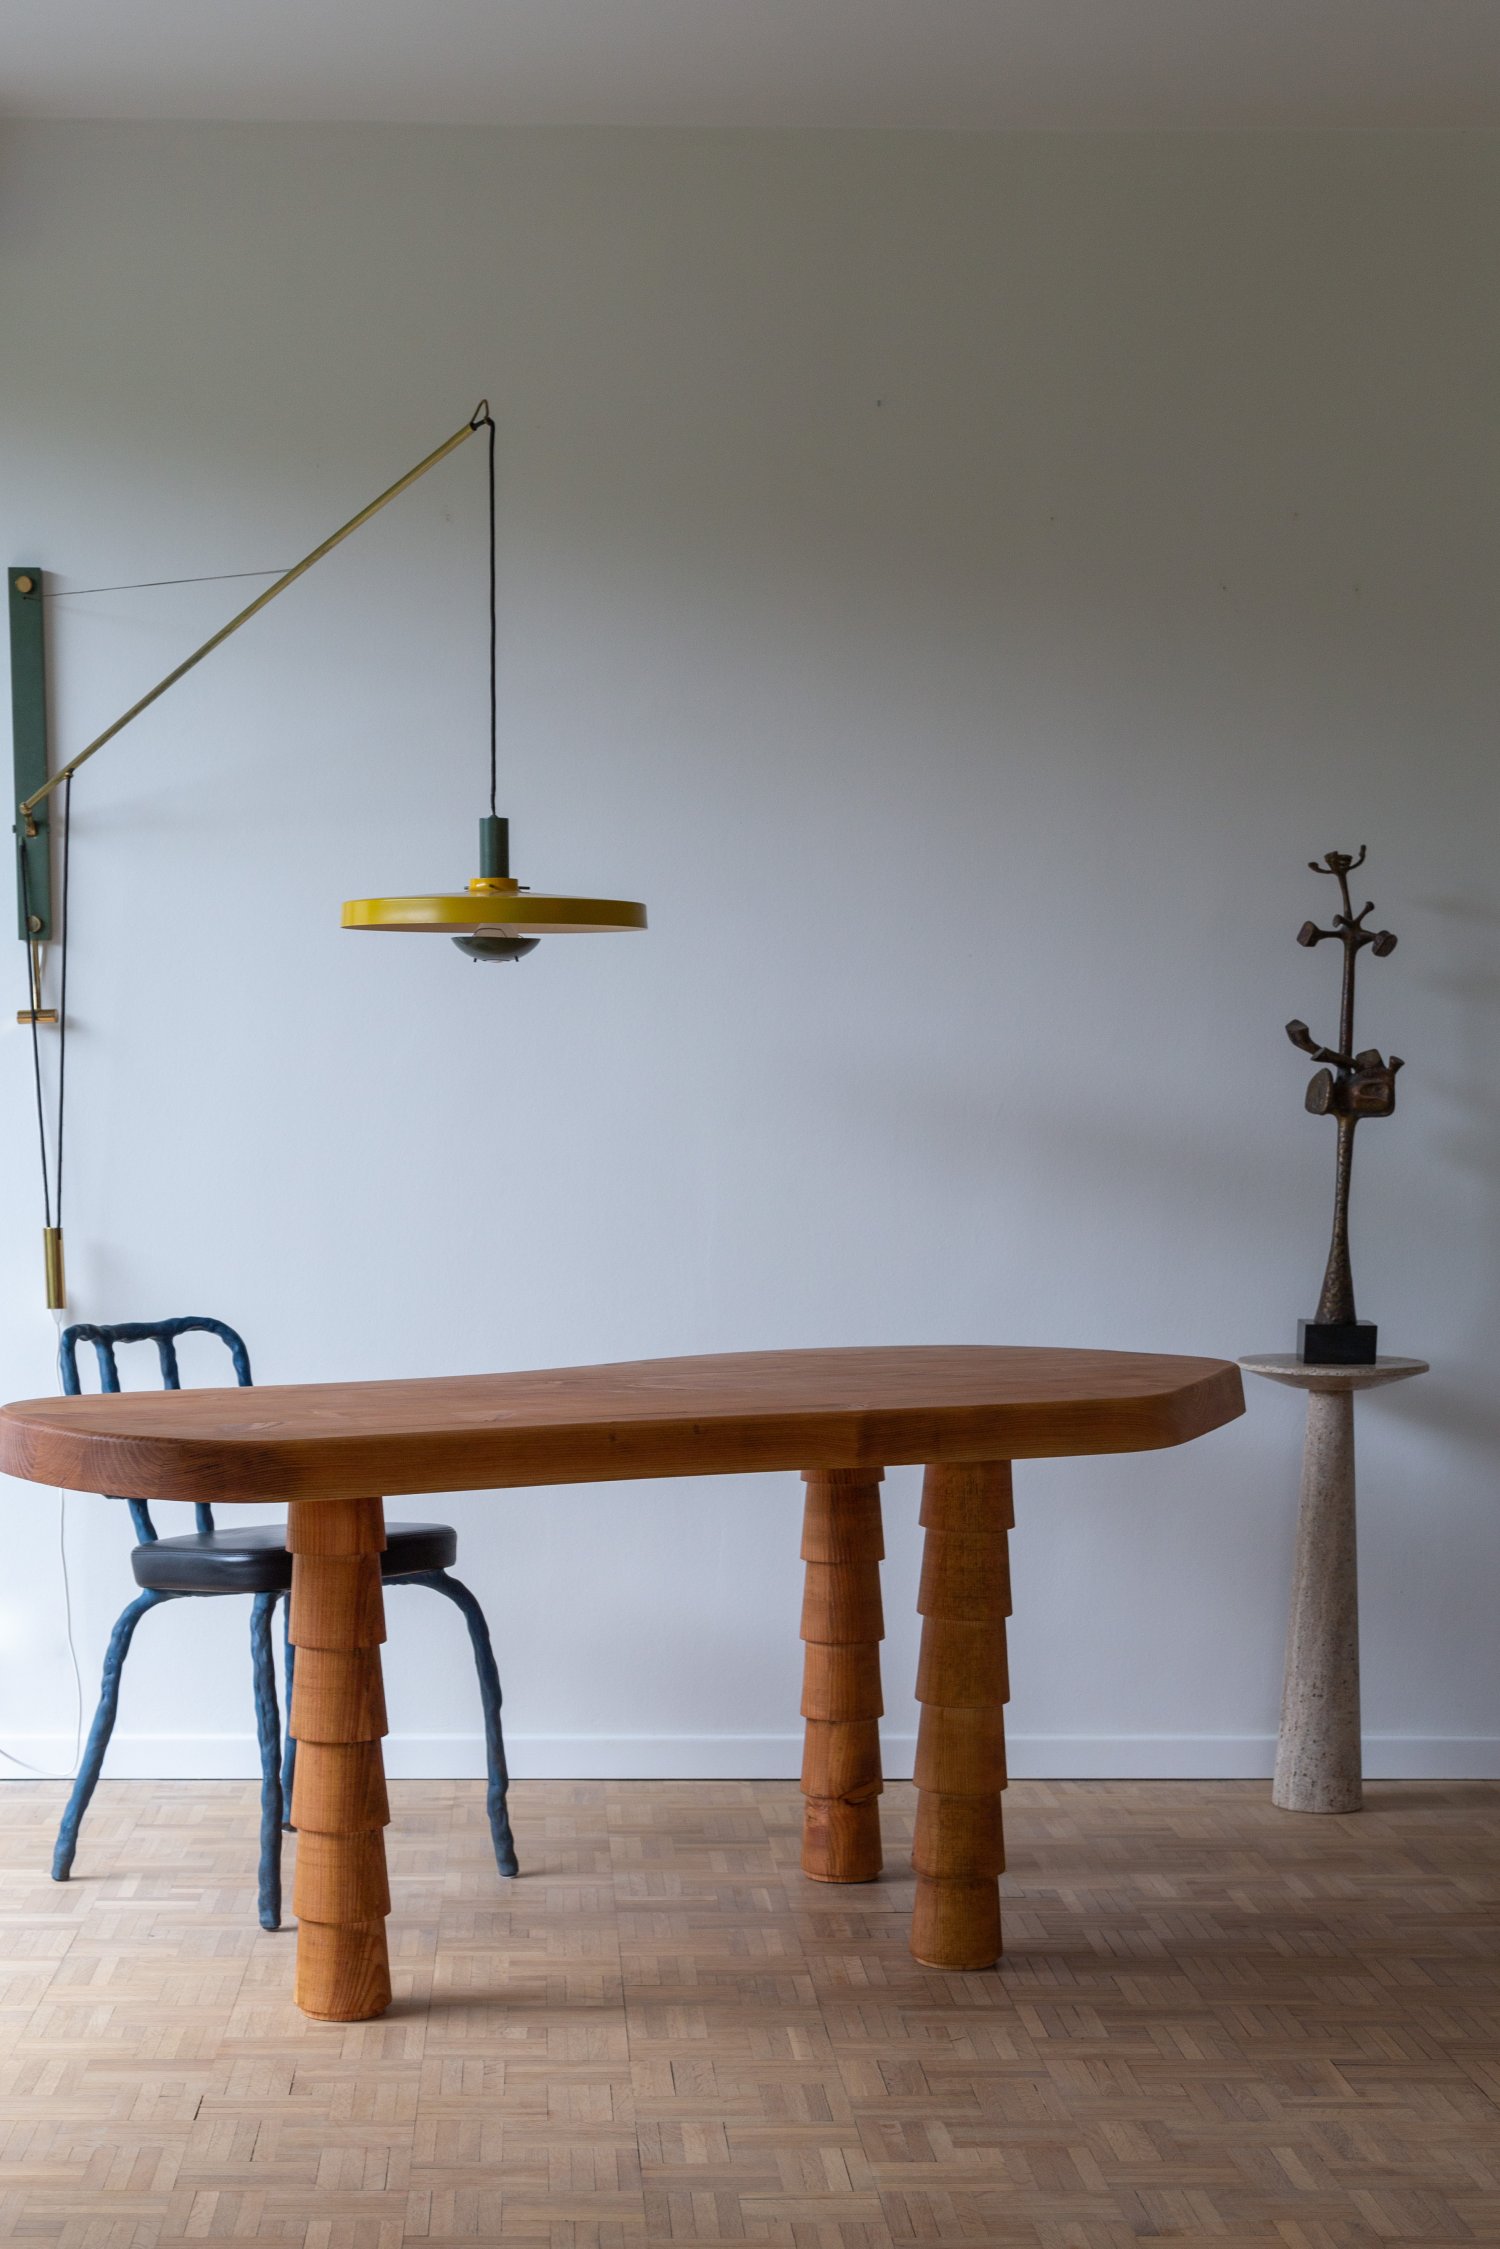 Table by Thomas Serruys